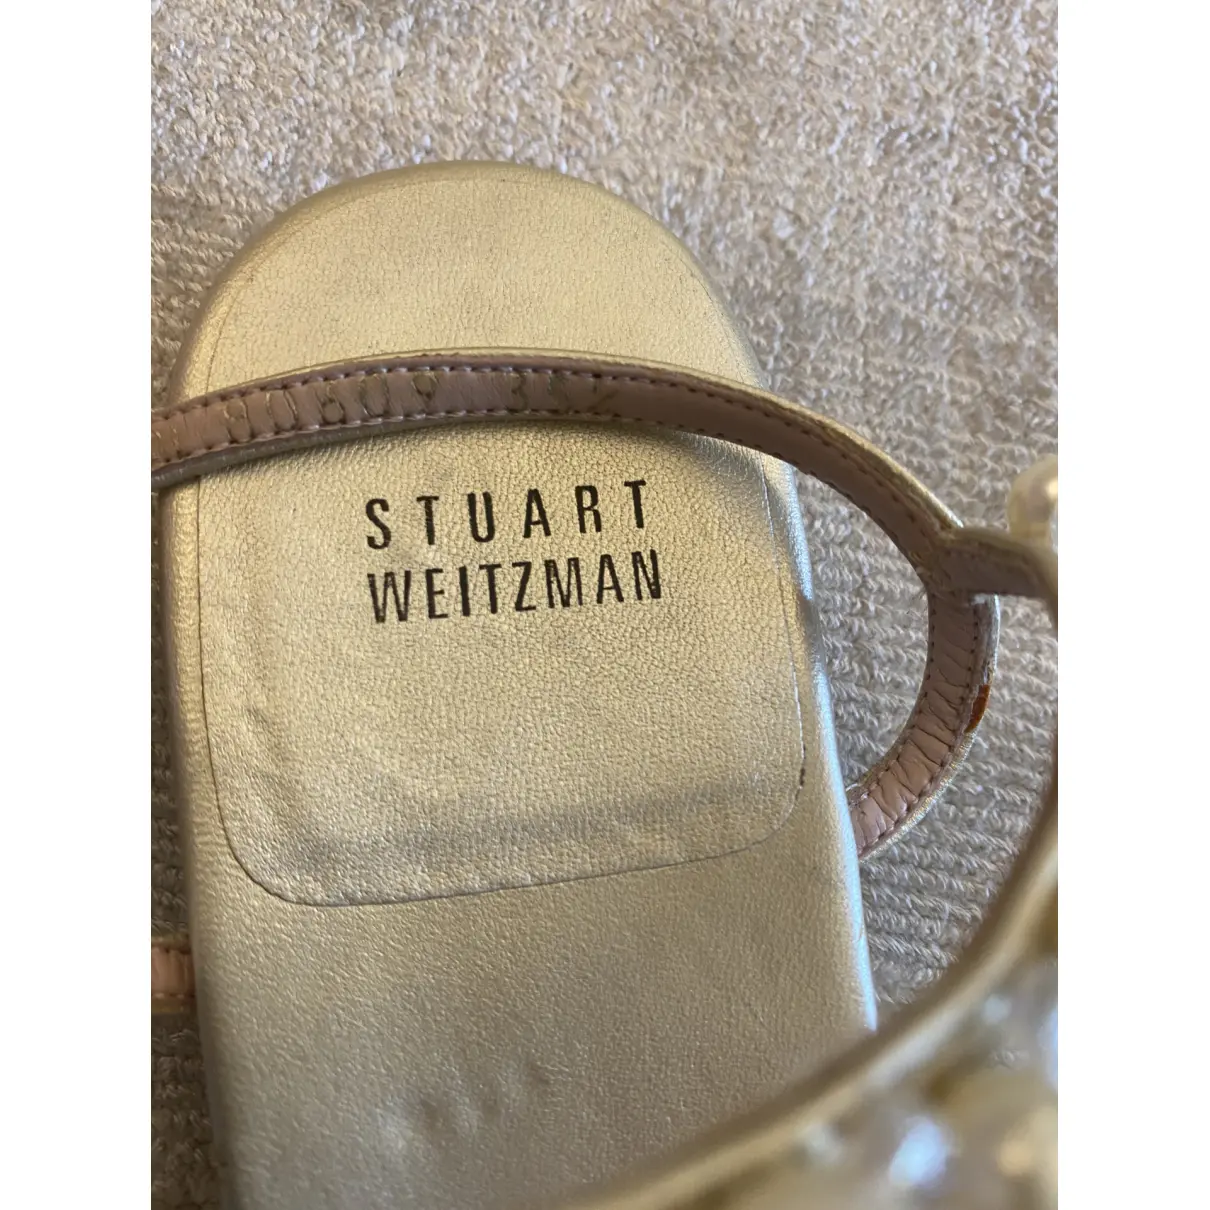 Luxury Stuart Weitzman Sandals Women